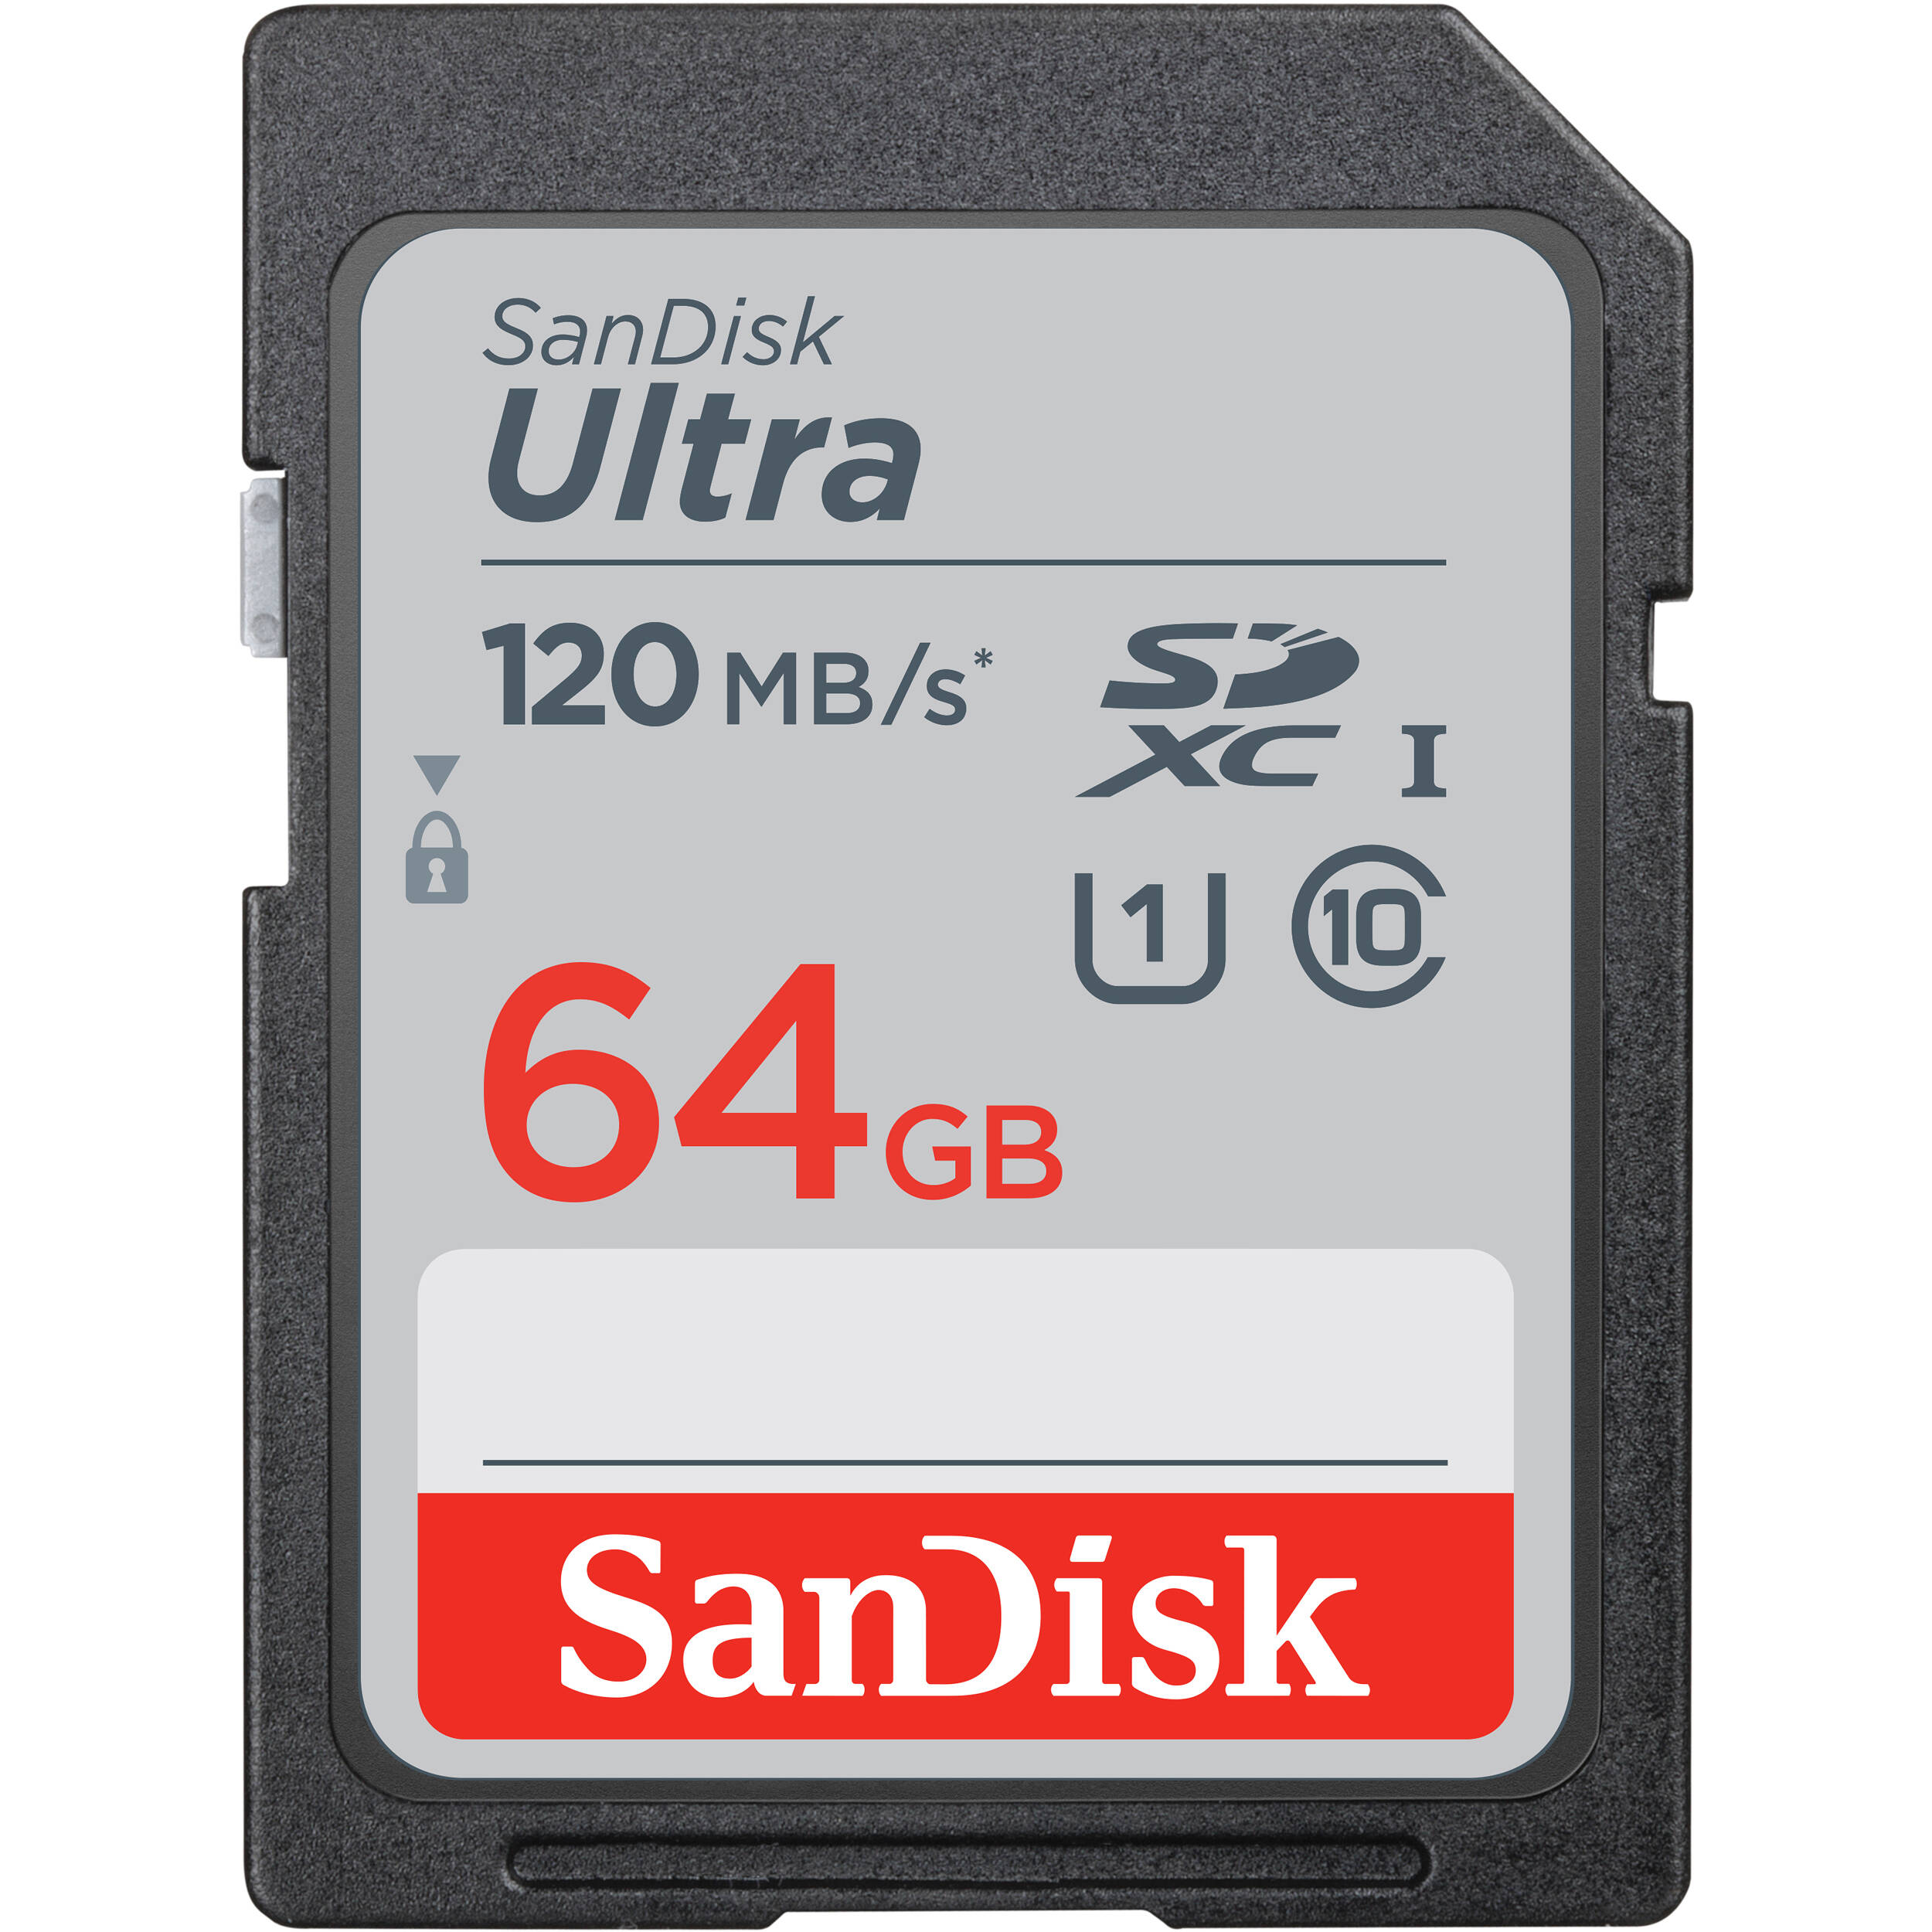 SanDisk Ultra SD Memory Card 64GB